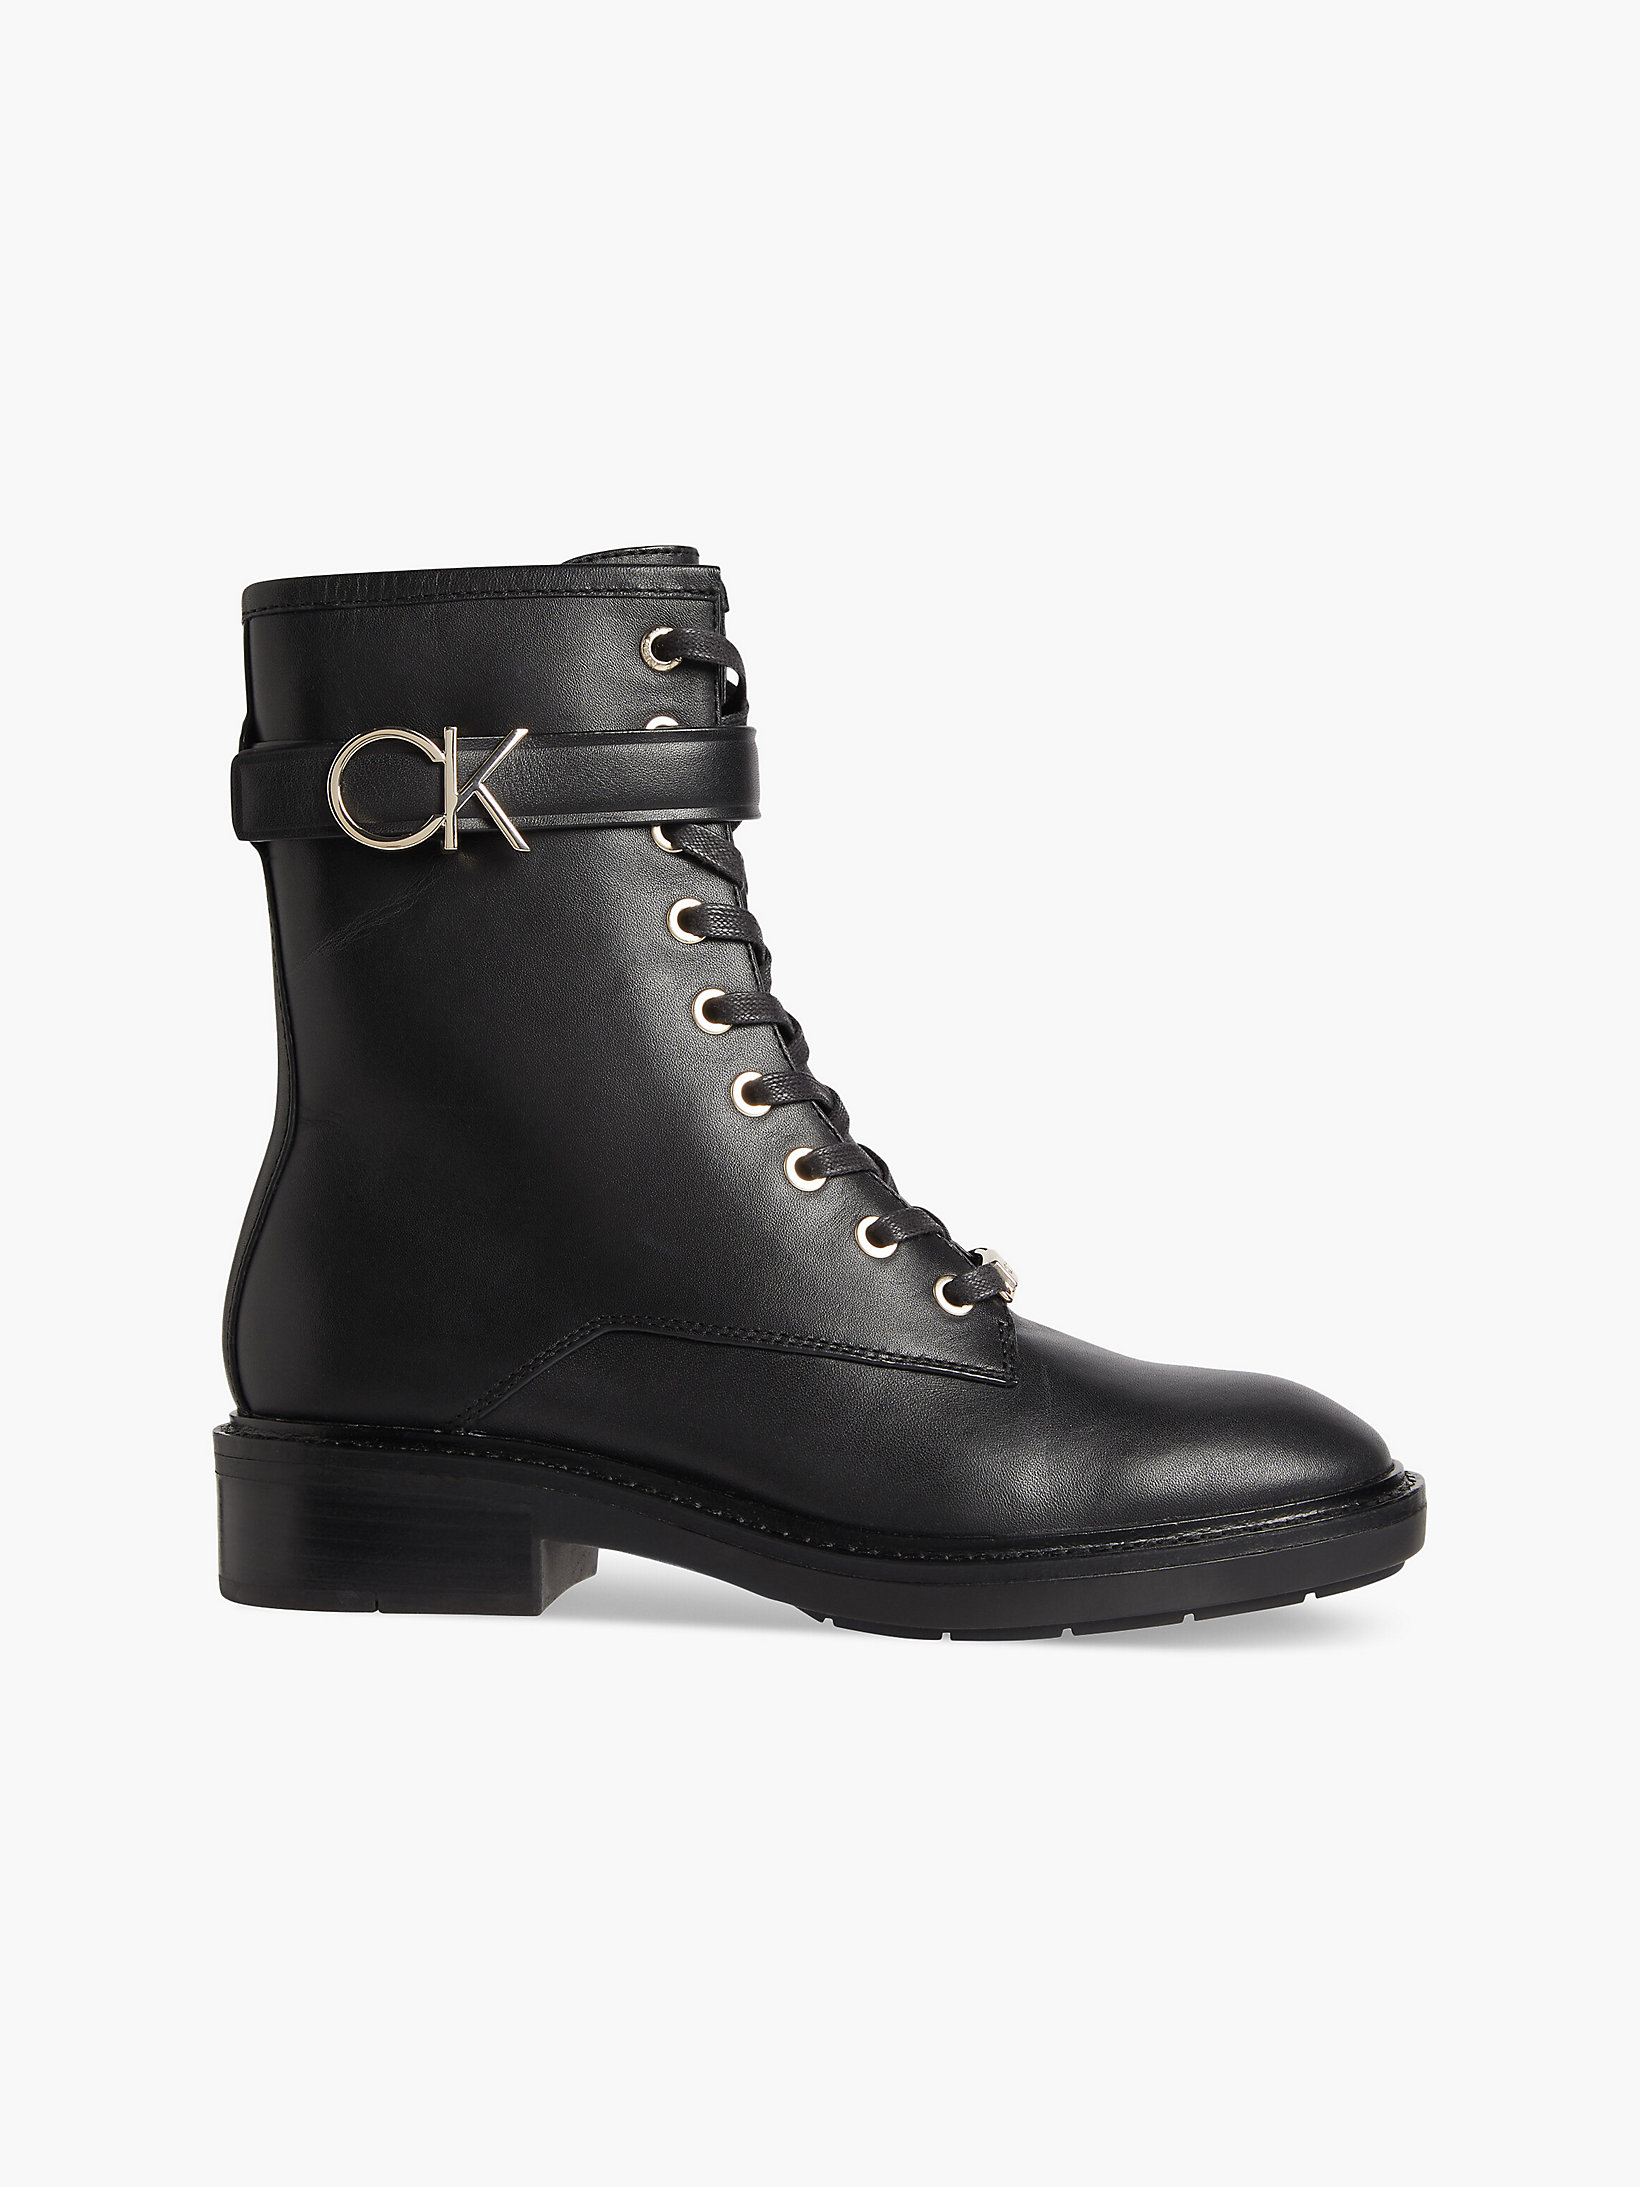 CK Black Leather Heeled Boots undefined women Calvin Klein